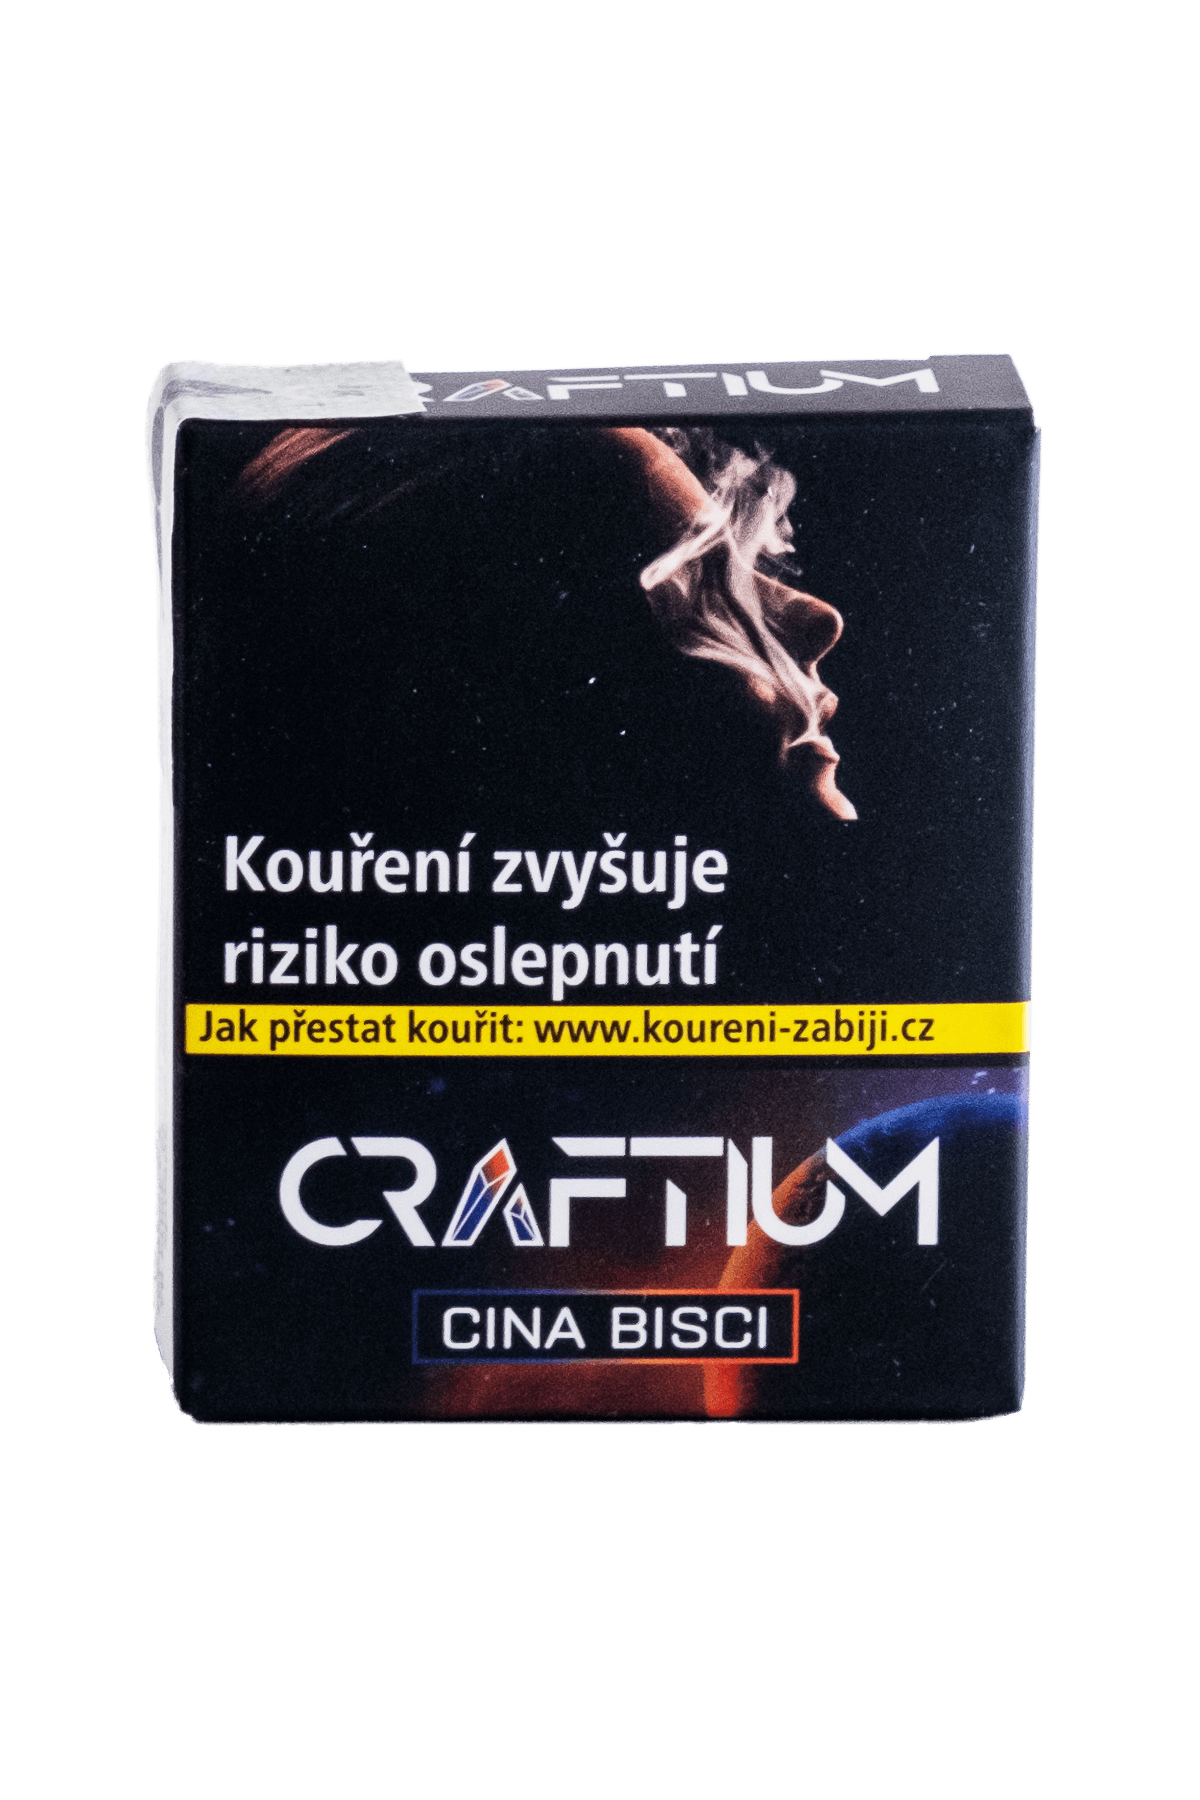 Tabák - Craftium 20g - Cina Bisci